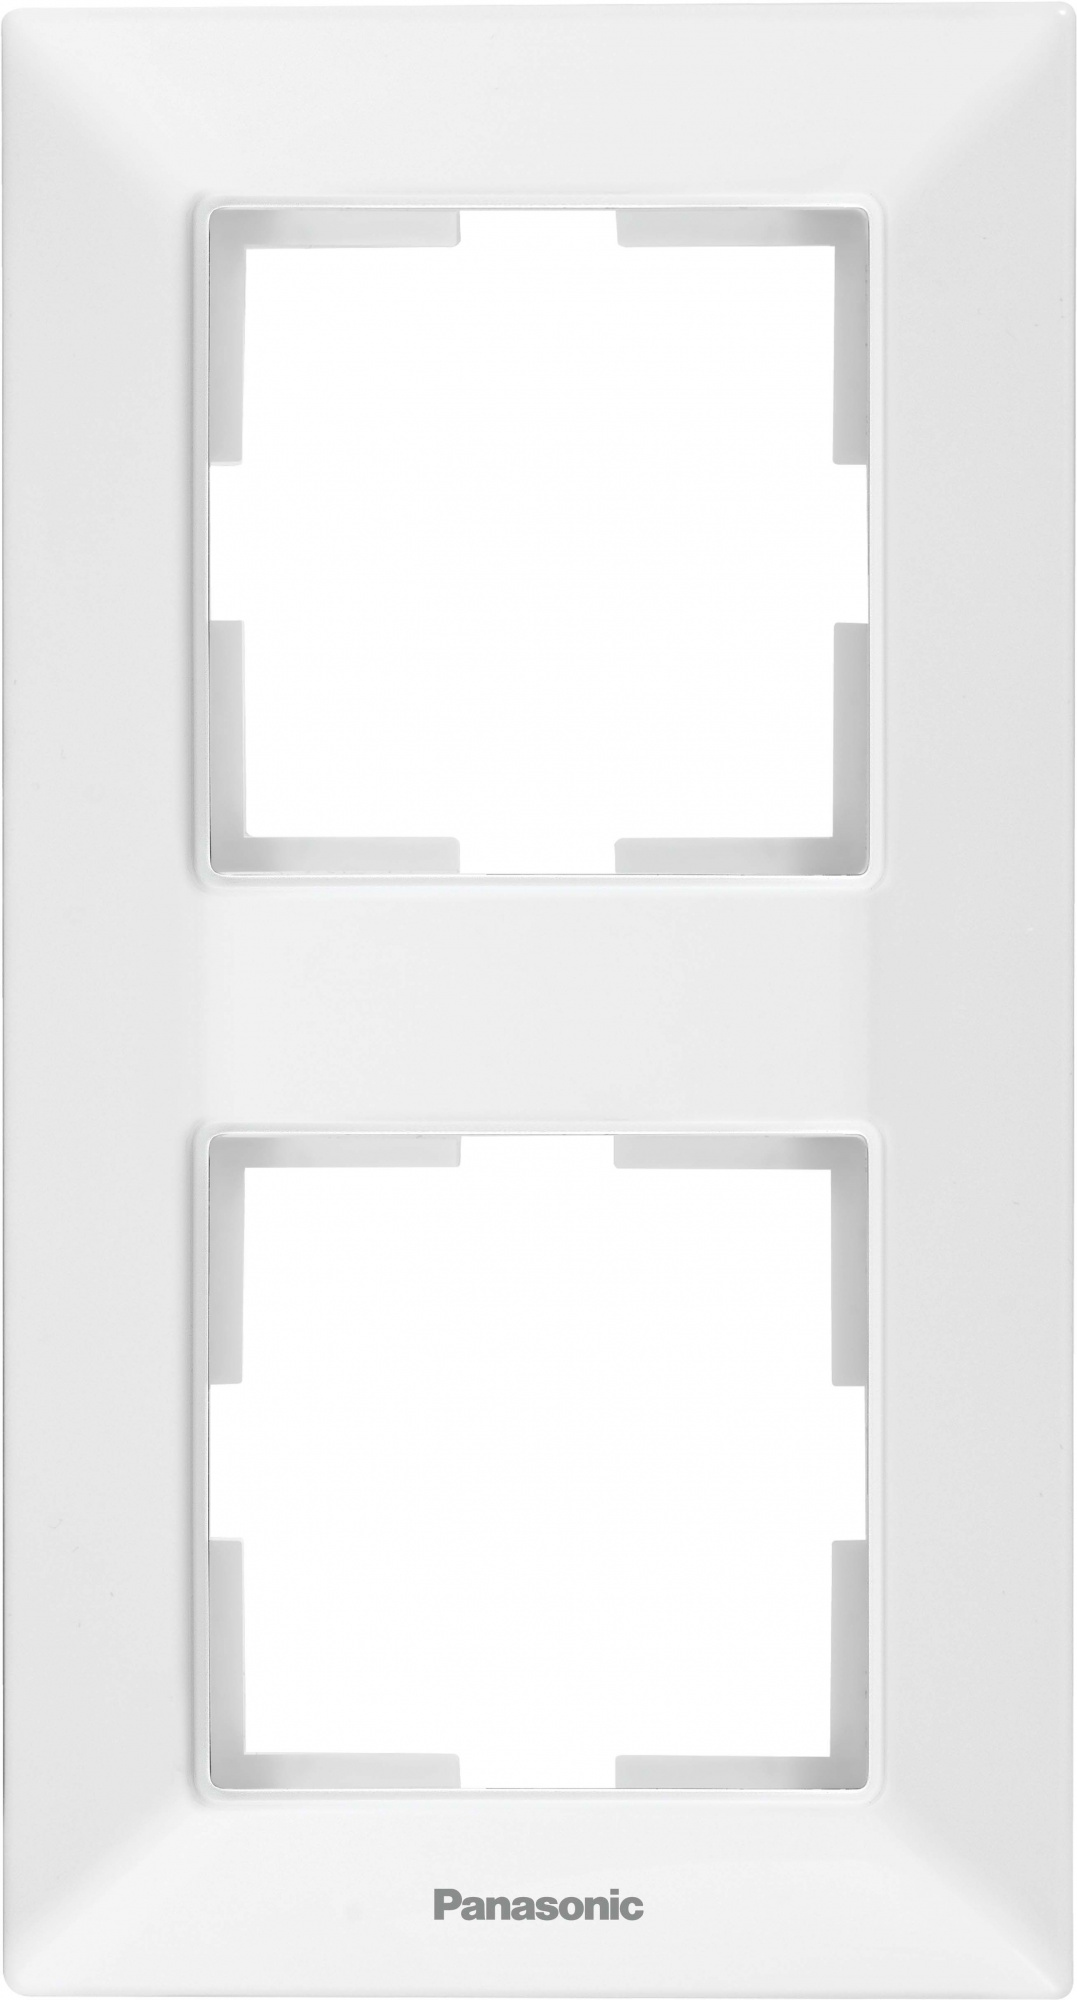 Рамка Panasonic Arkedia Slim WNTF08122WH-RU 2x вертикальный монтаж пластик белый (упак.:1шт)